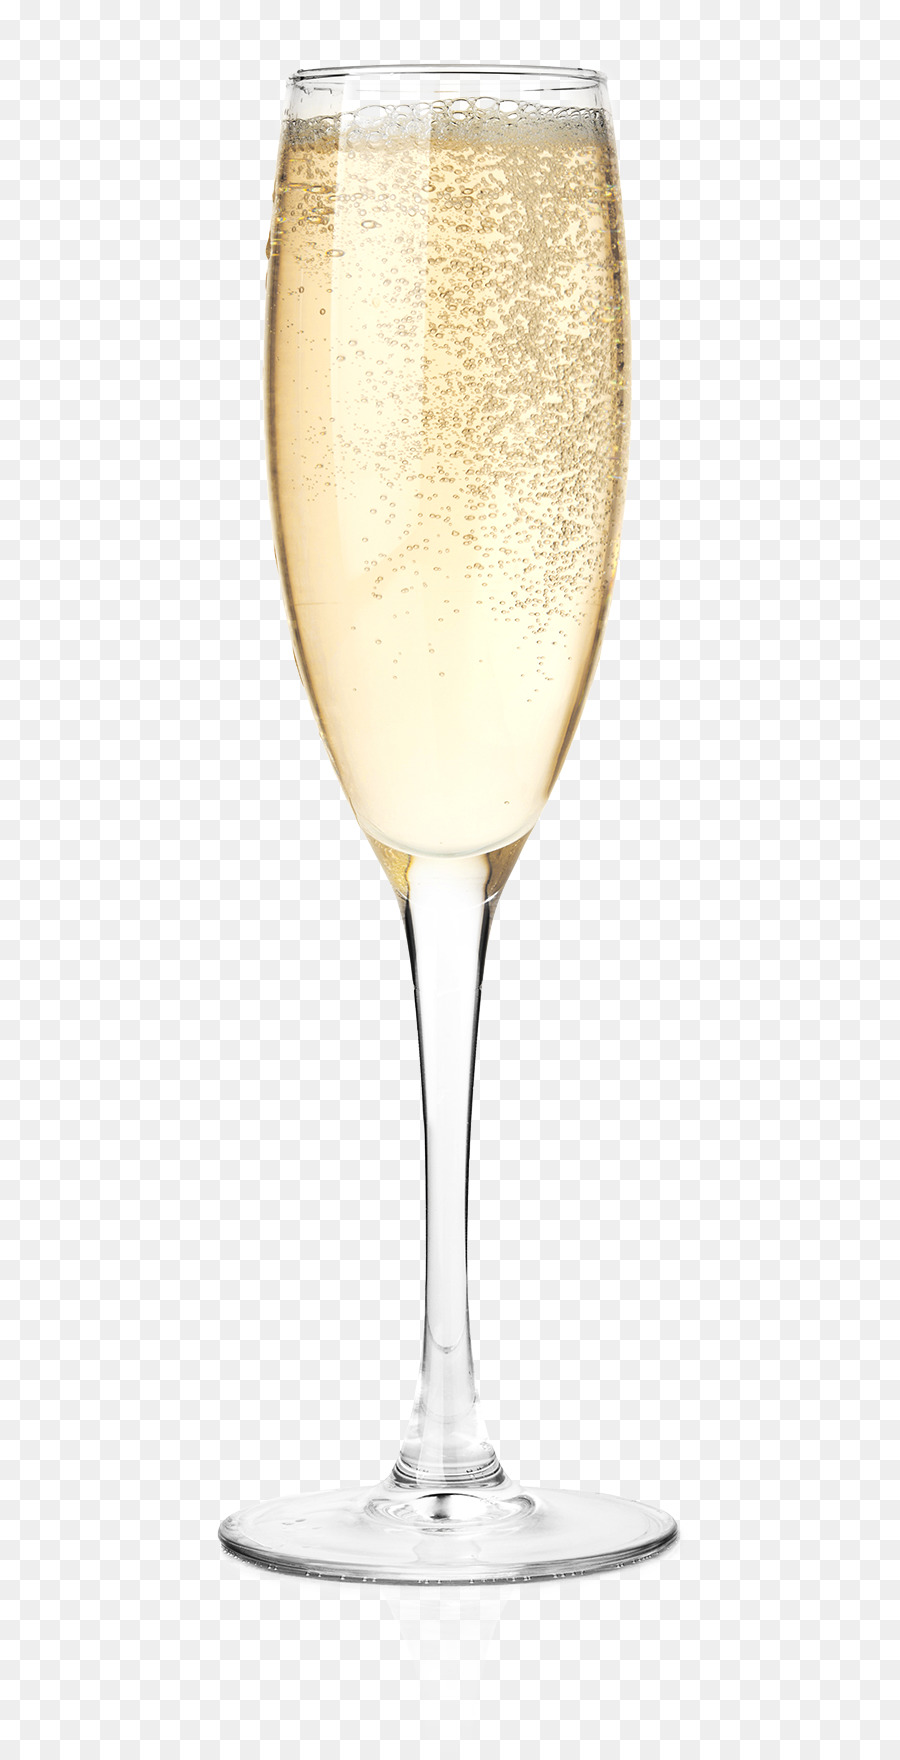 Champagne Glasses Background img